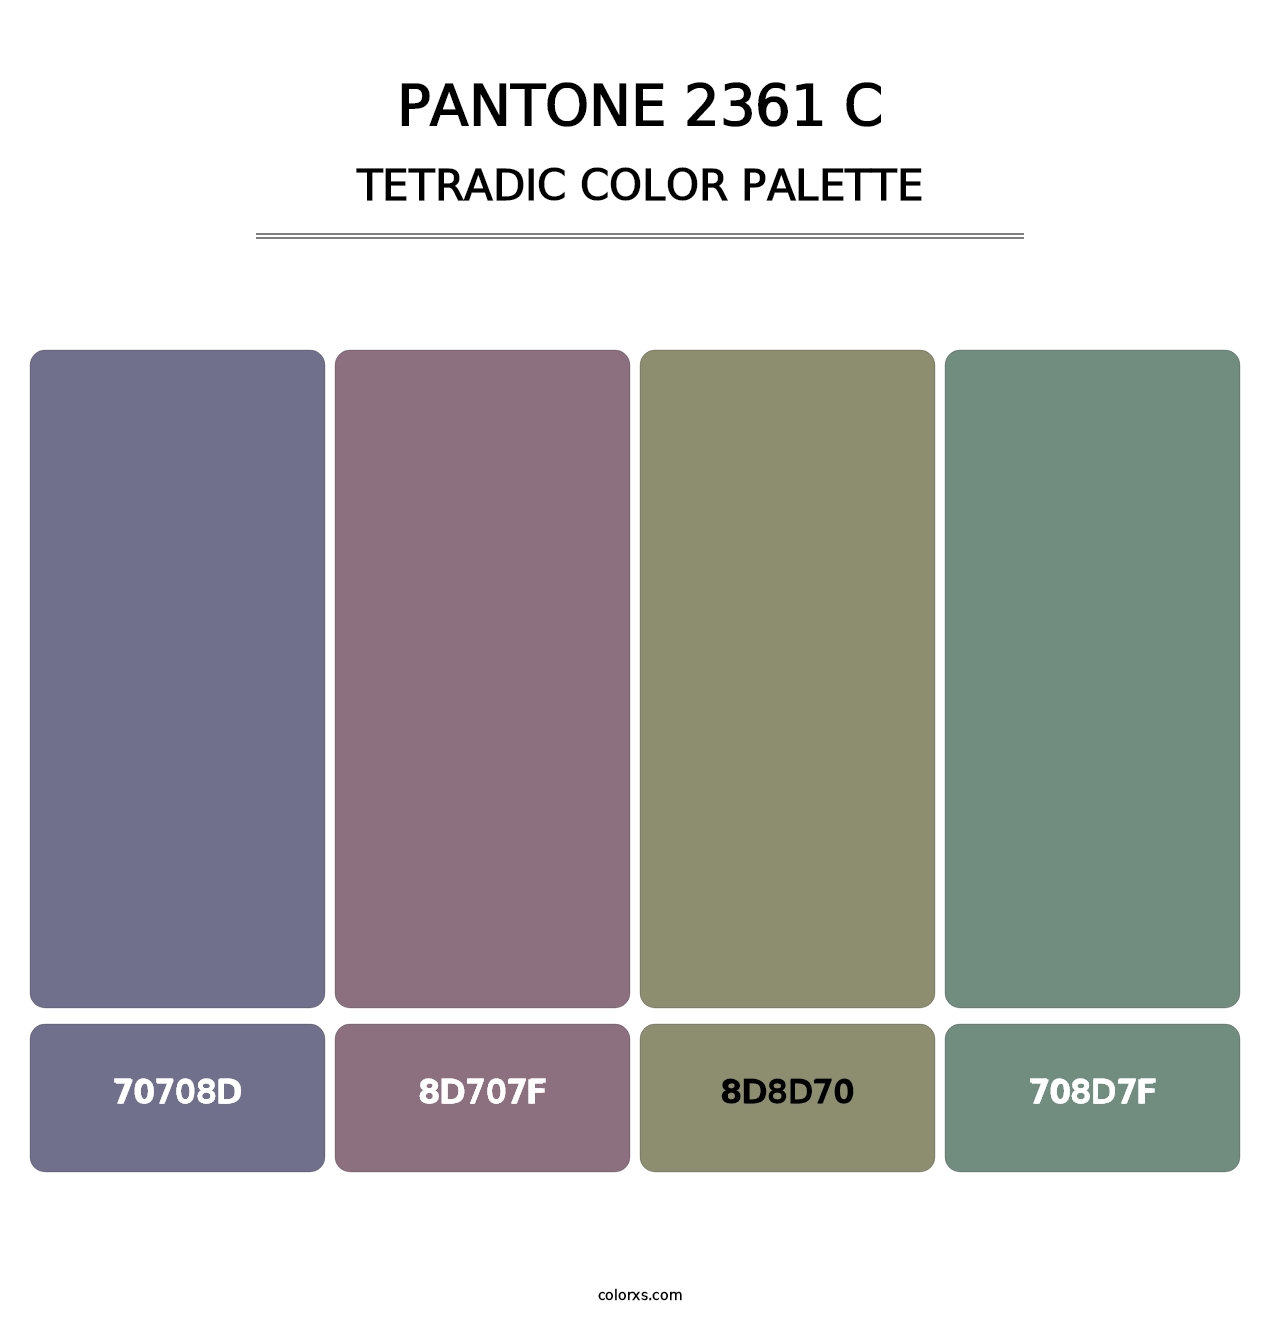 PANTONE 2361 C - Tetradic Color Palette